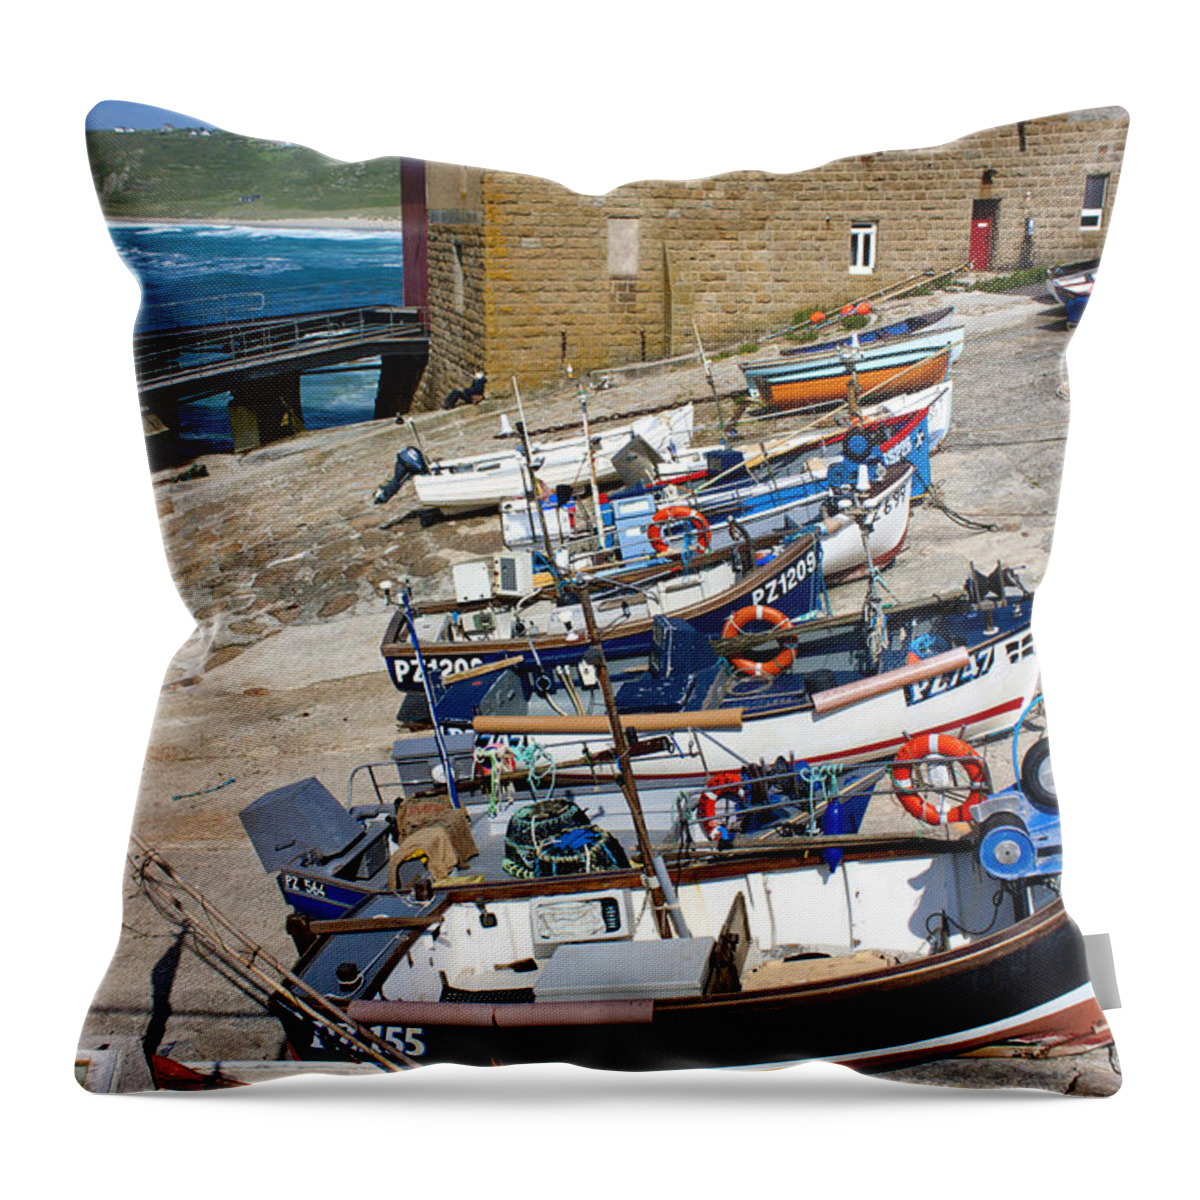 Sennen Cove Throw Pillow featuring the photograph Sennen Cove Fishing Fleet by Terri Waters